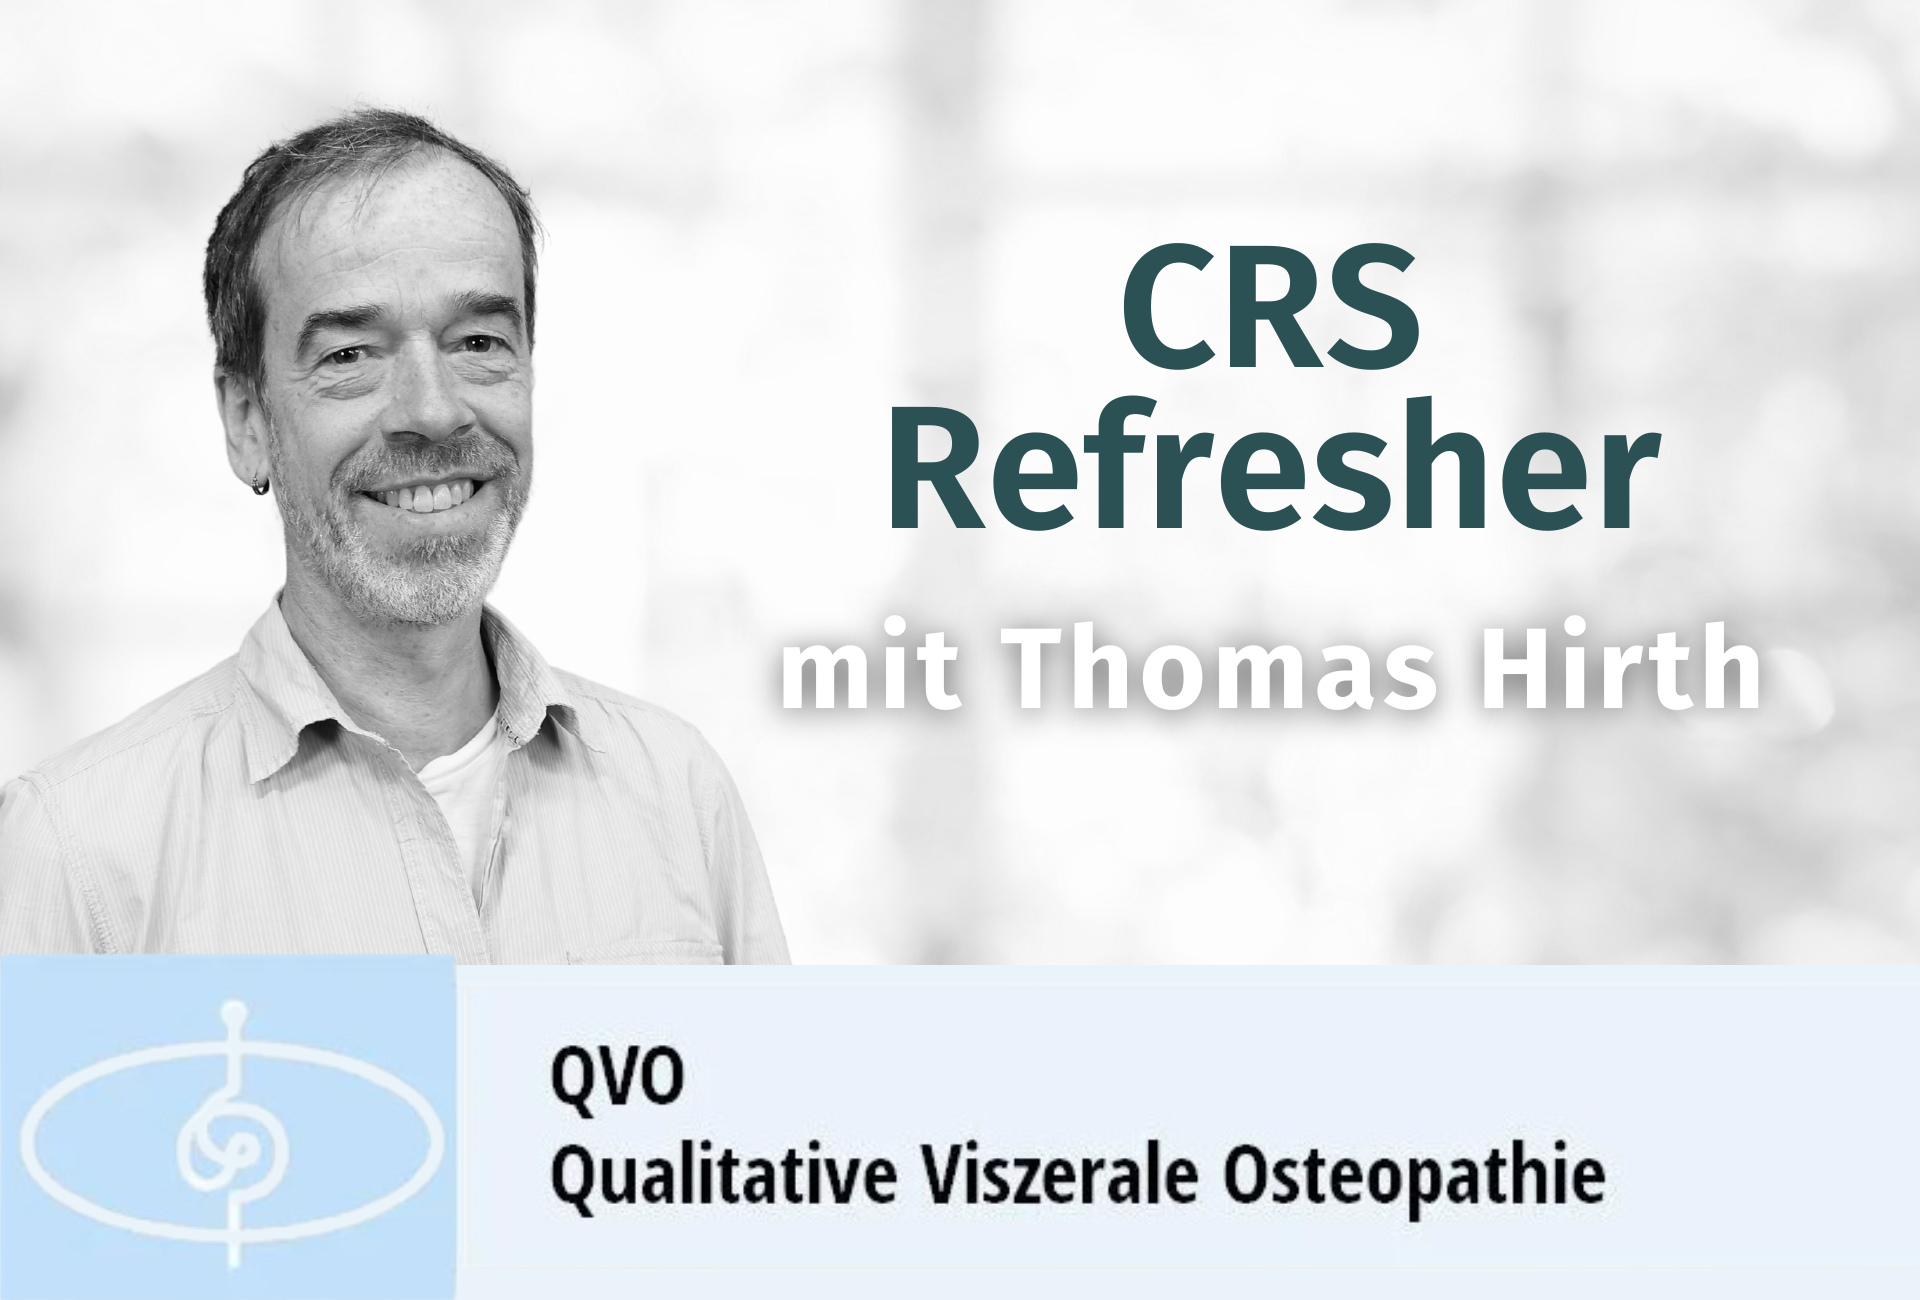 Qualitative Viszerale Osteopathie: Refresher CRS